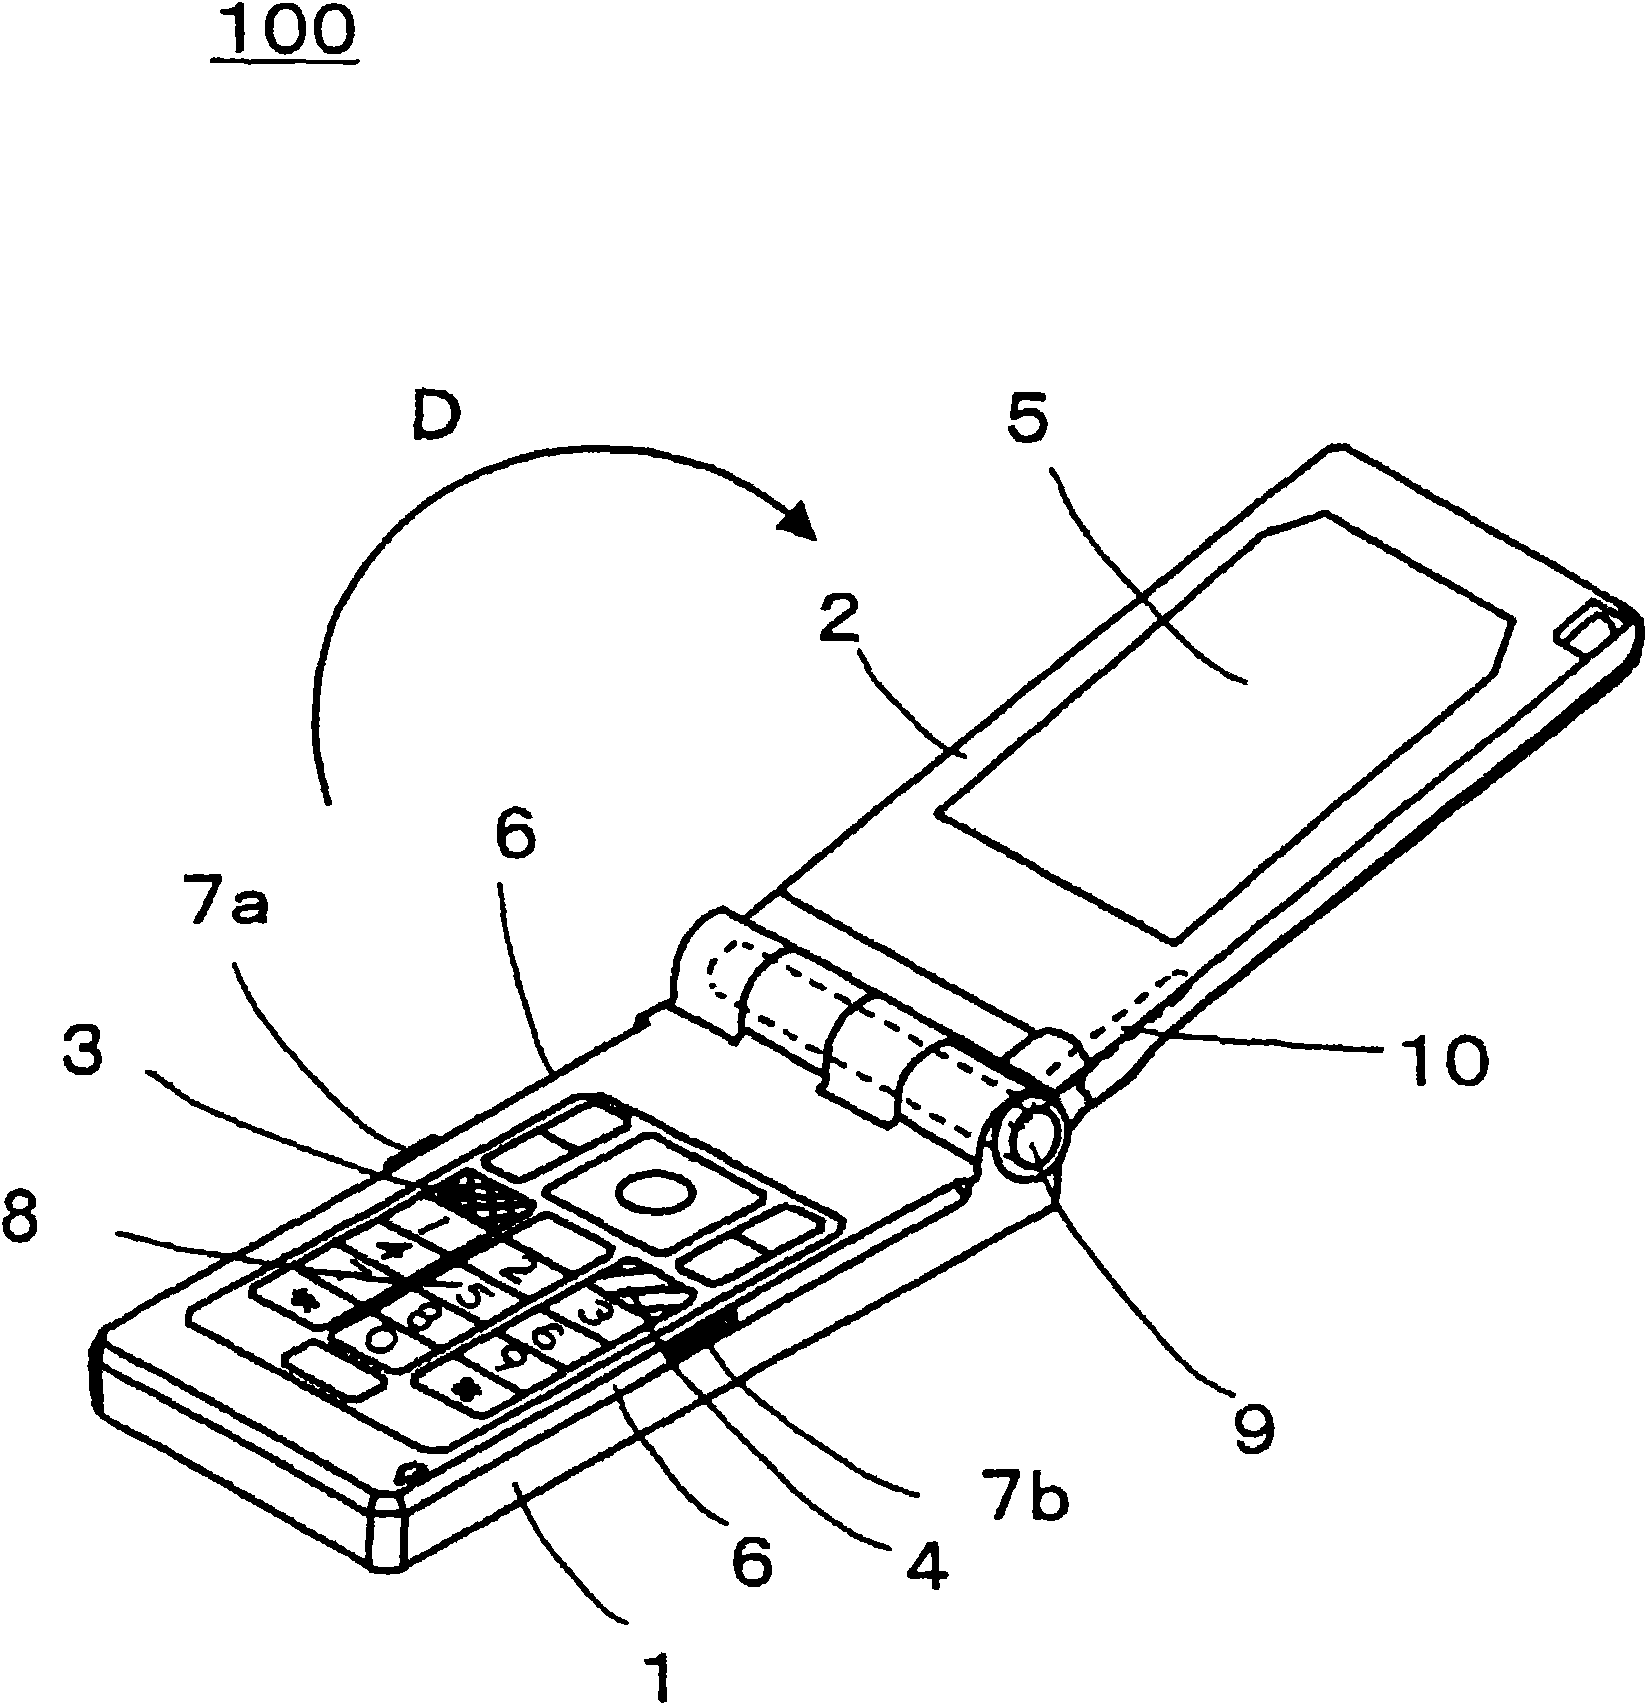 Mobile terminal device